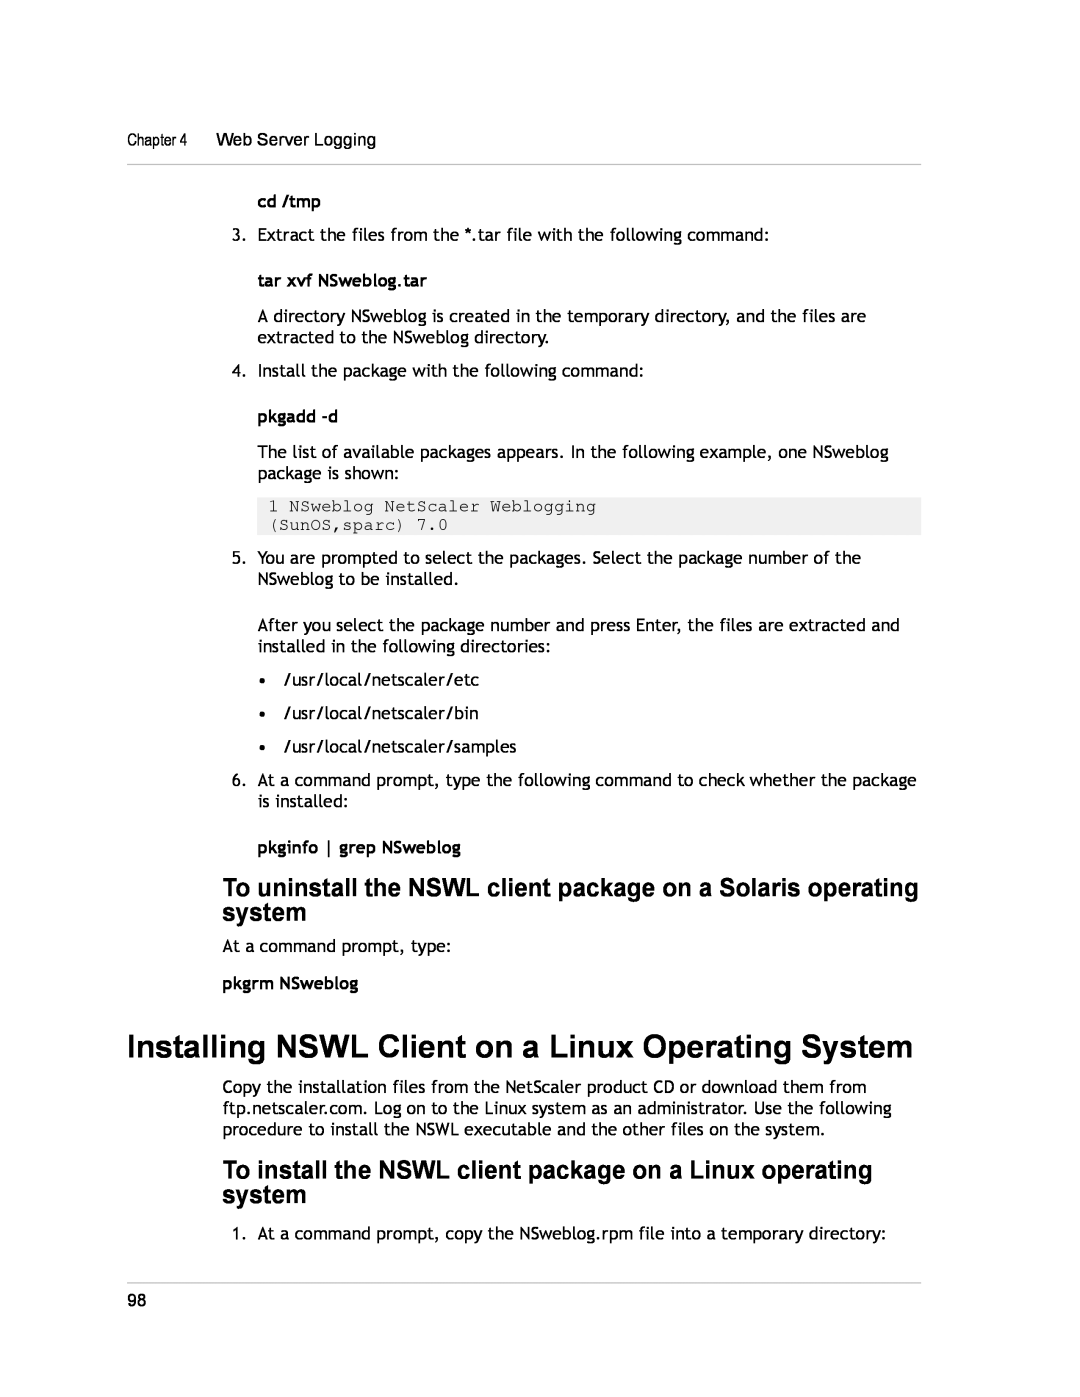 Citrix Systems CITRIX NETSCALER 9.3 Installing NSWL Client on a Linux Operating System, cd /tmp, tar xvf NSweblog.tar 